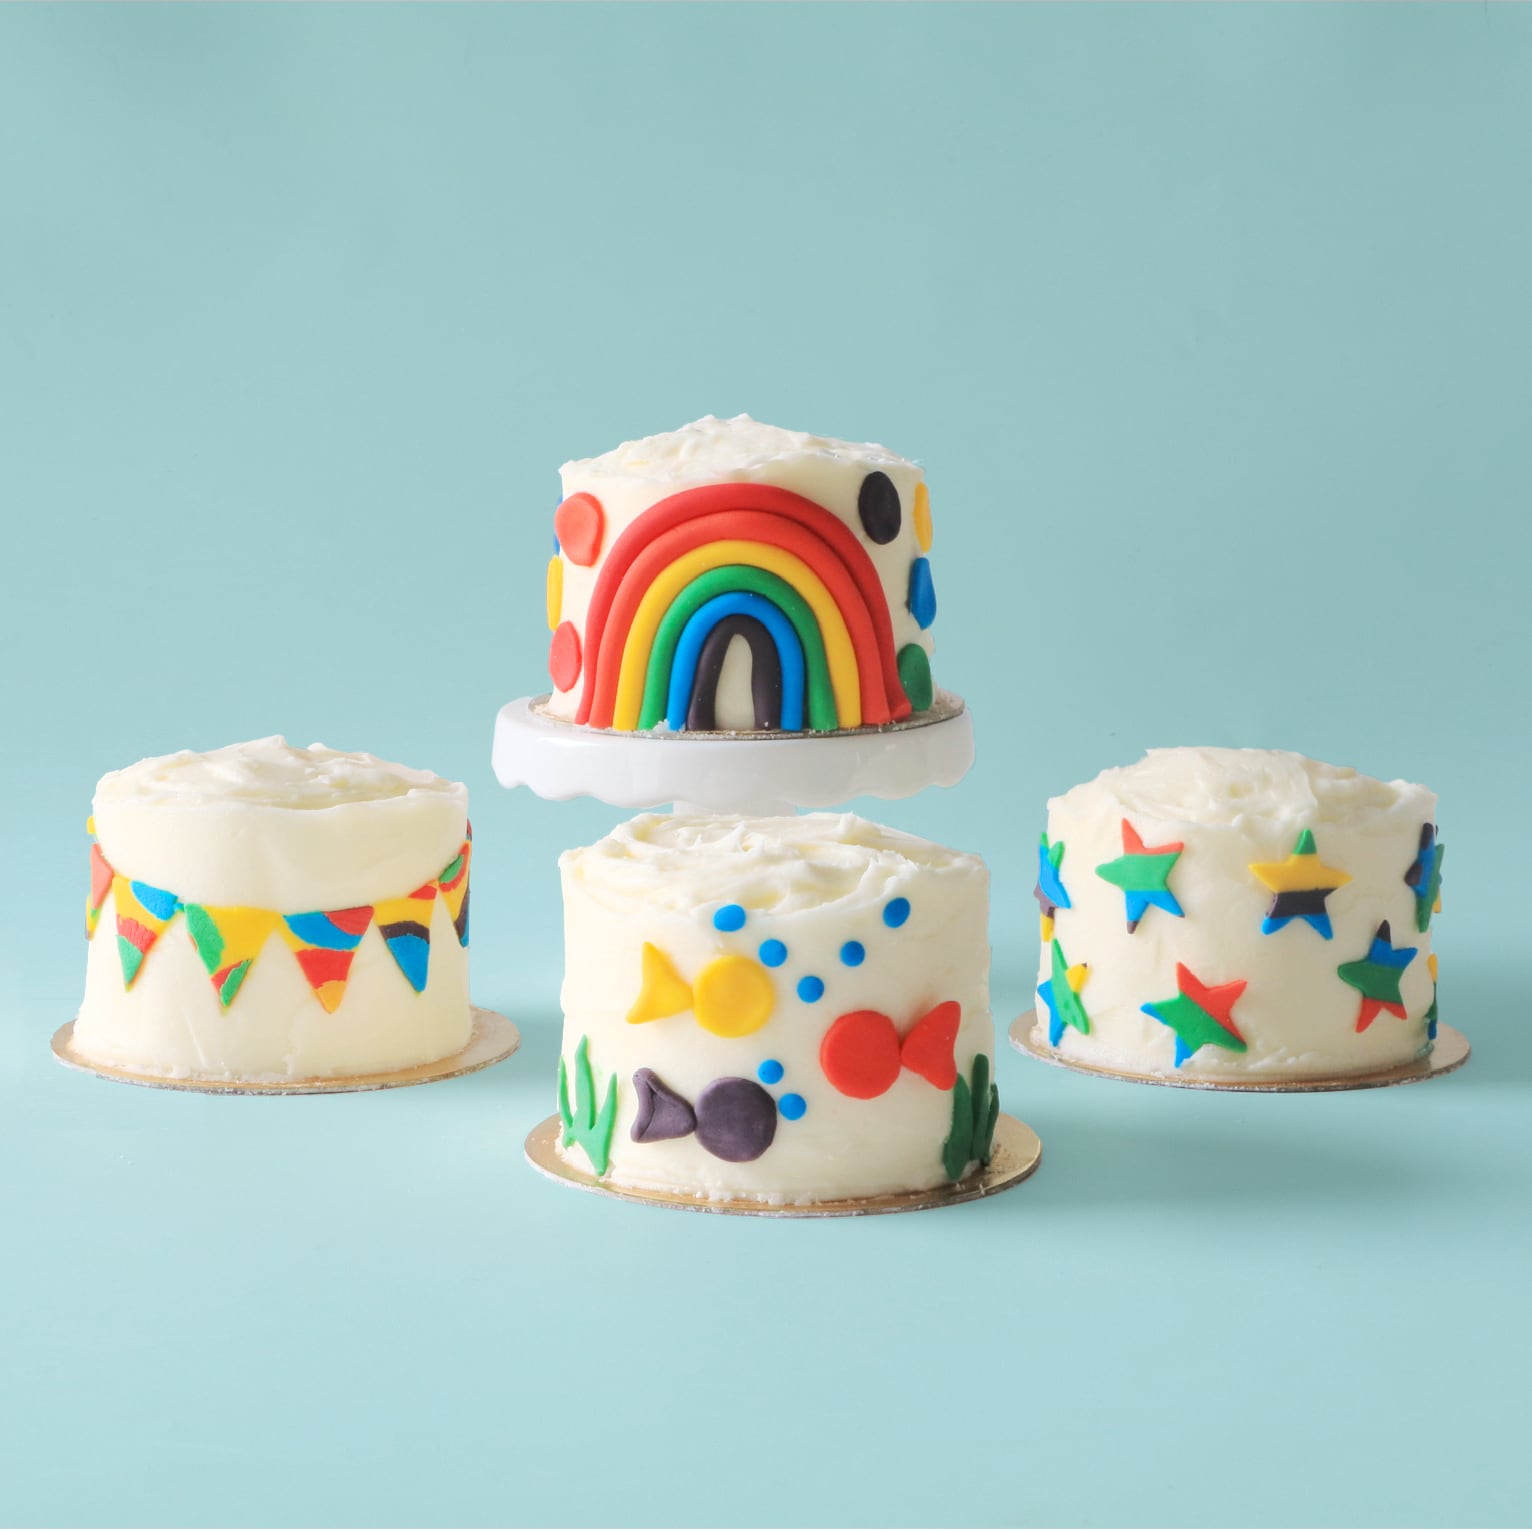 Affordable cake decorating kits